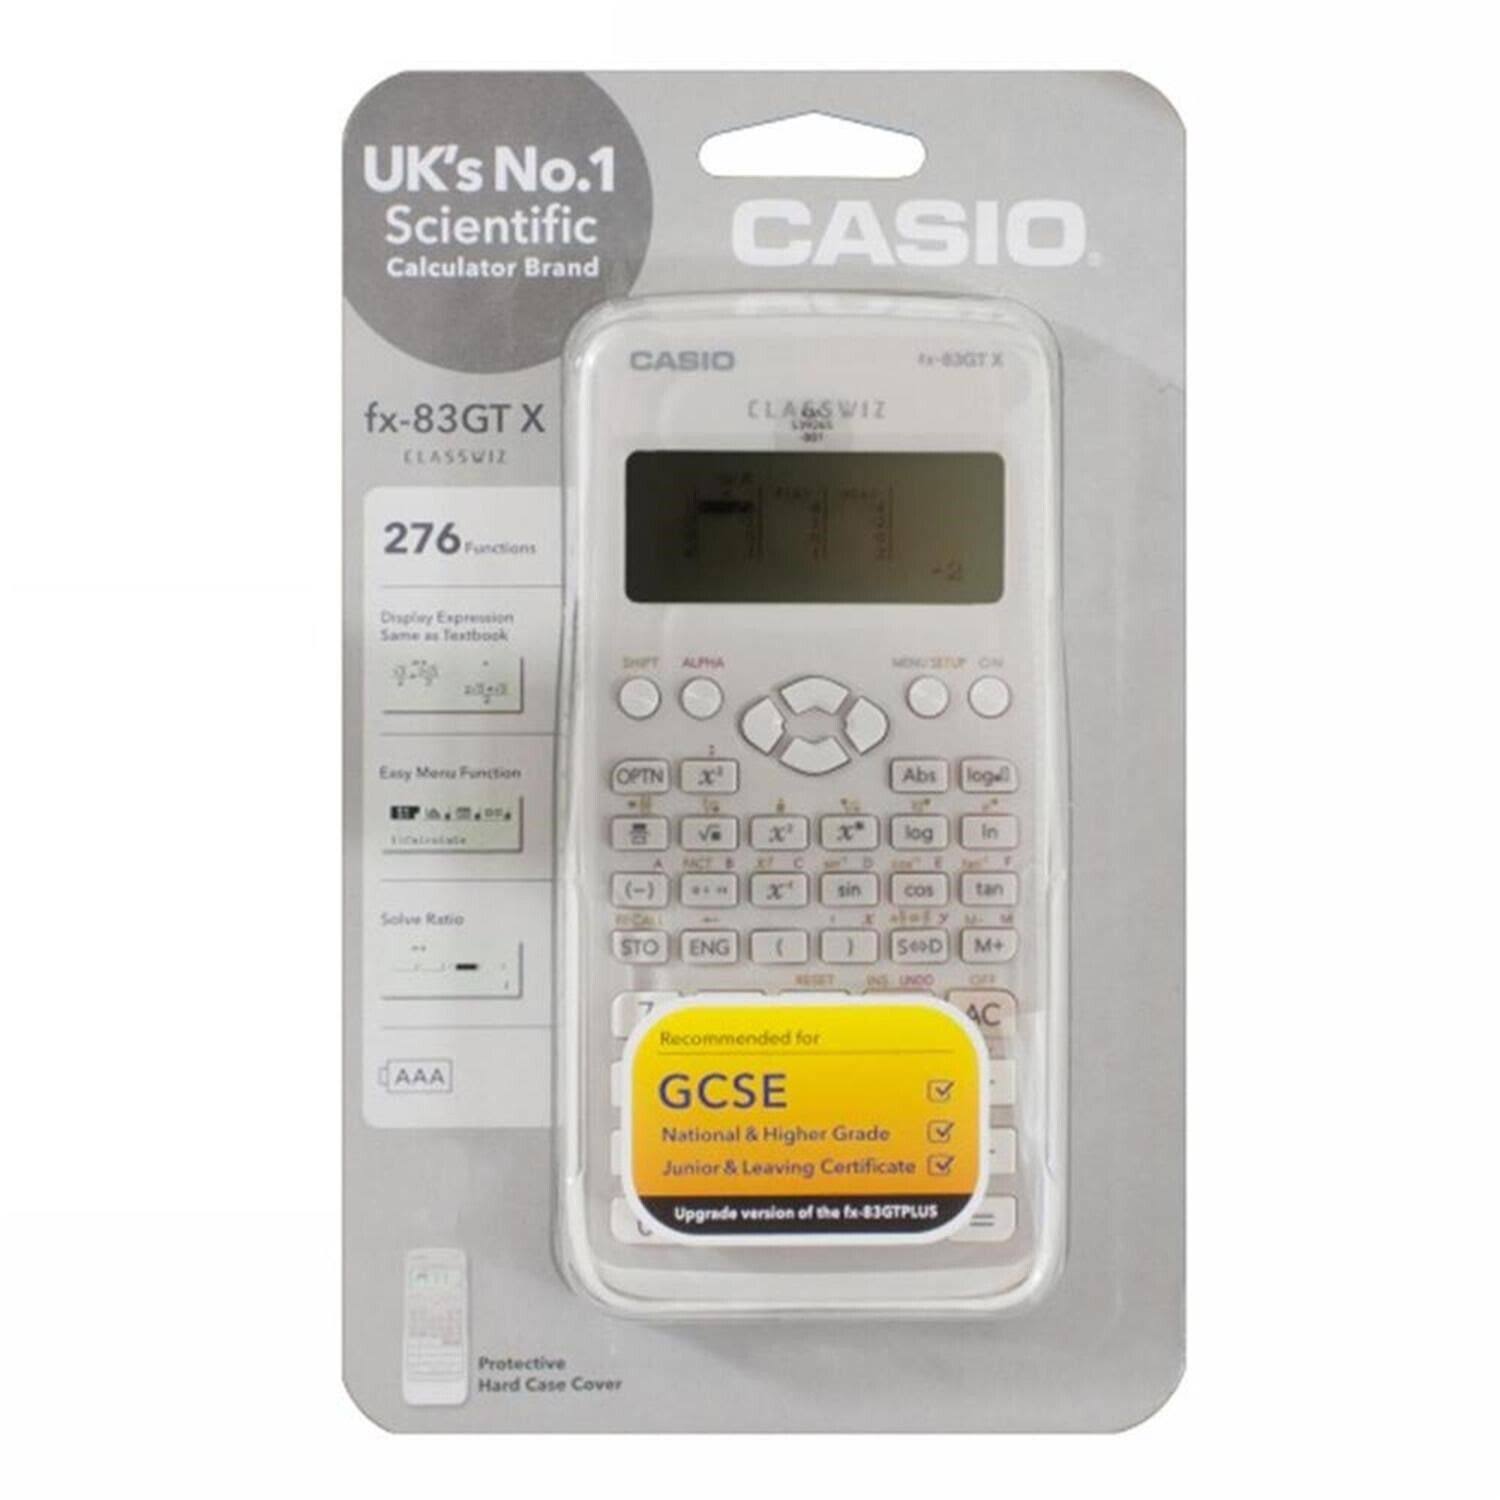 Casio Scientific 276 Functions Calculator - Grey/White